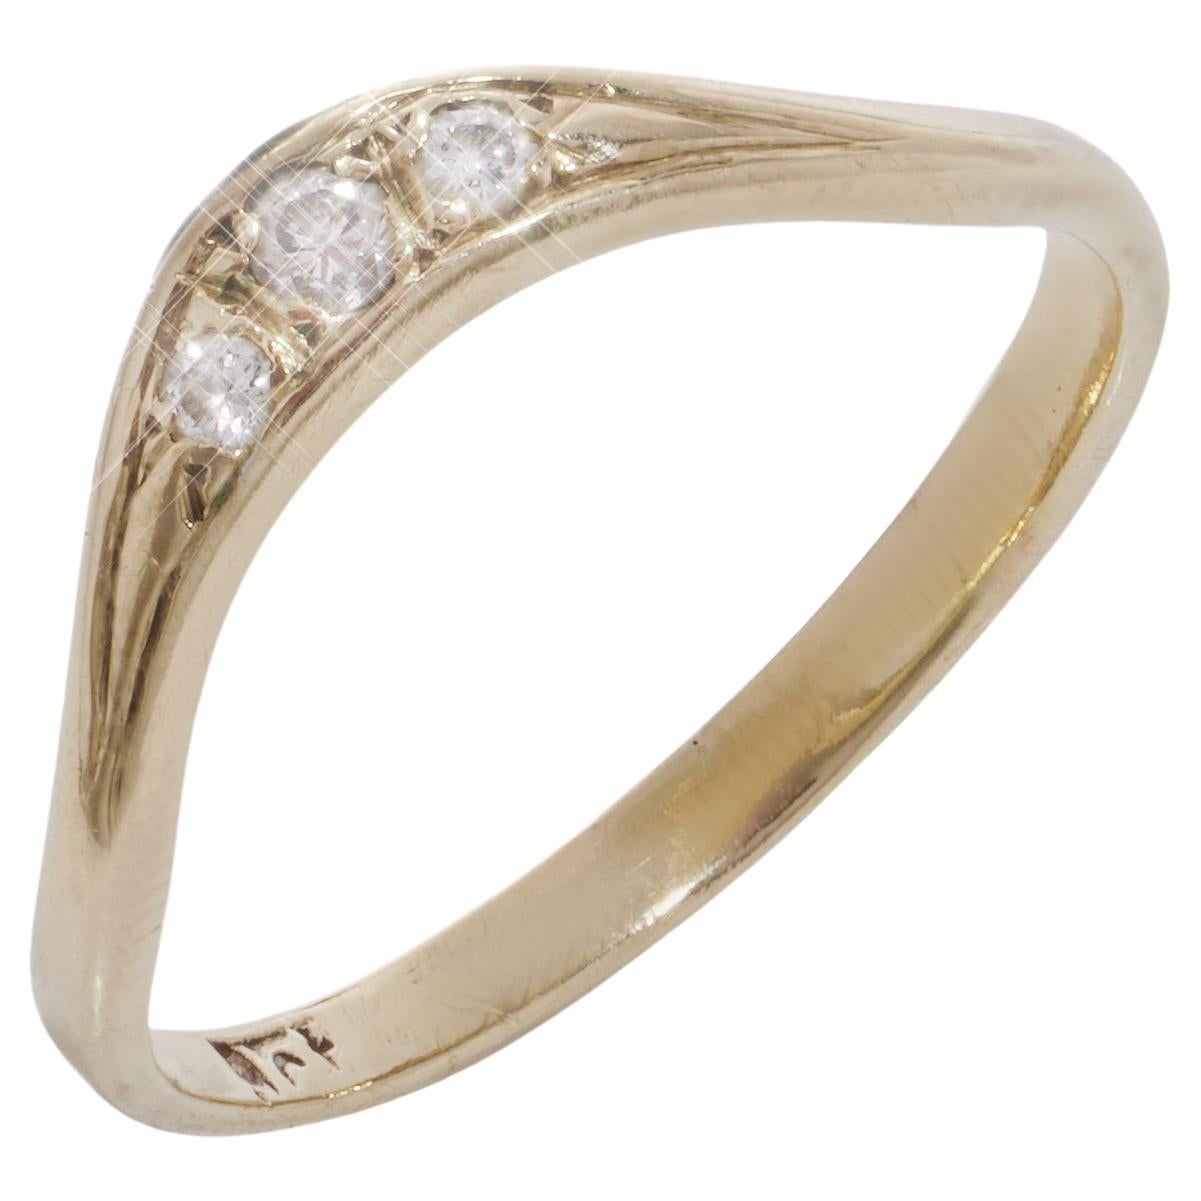 Vintage 9kt yellow gold three-stone diamond ring